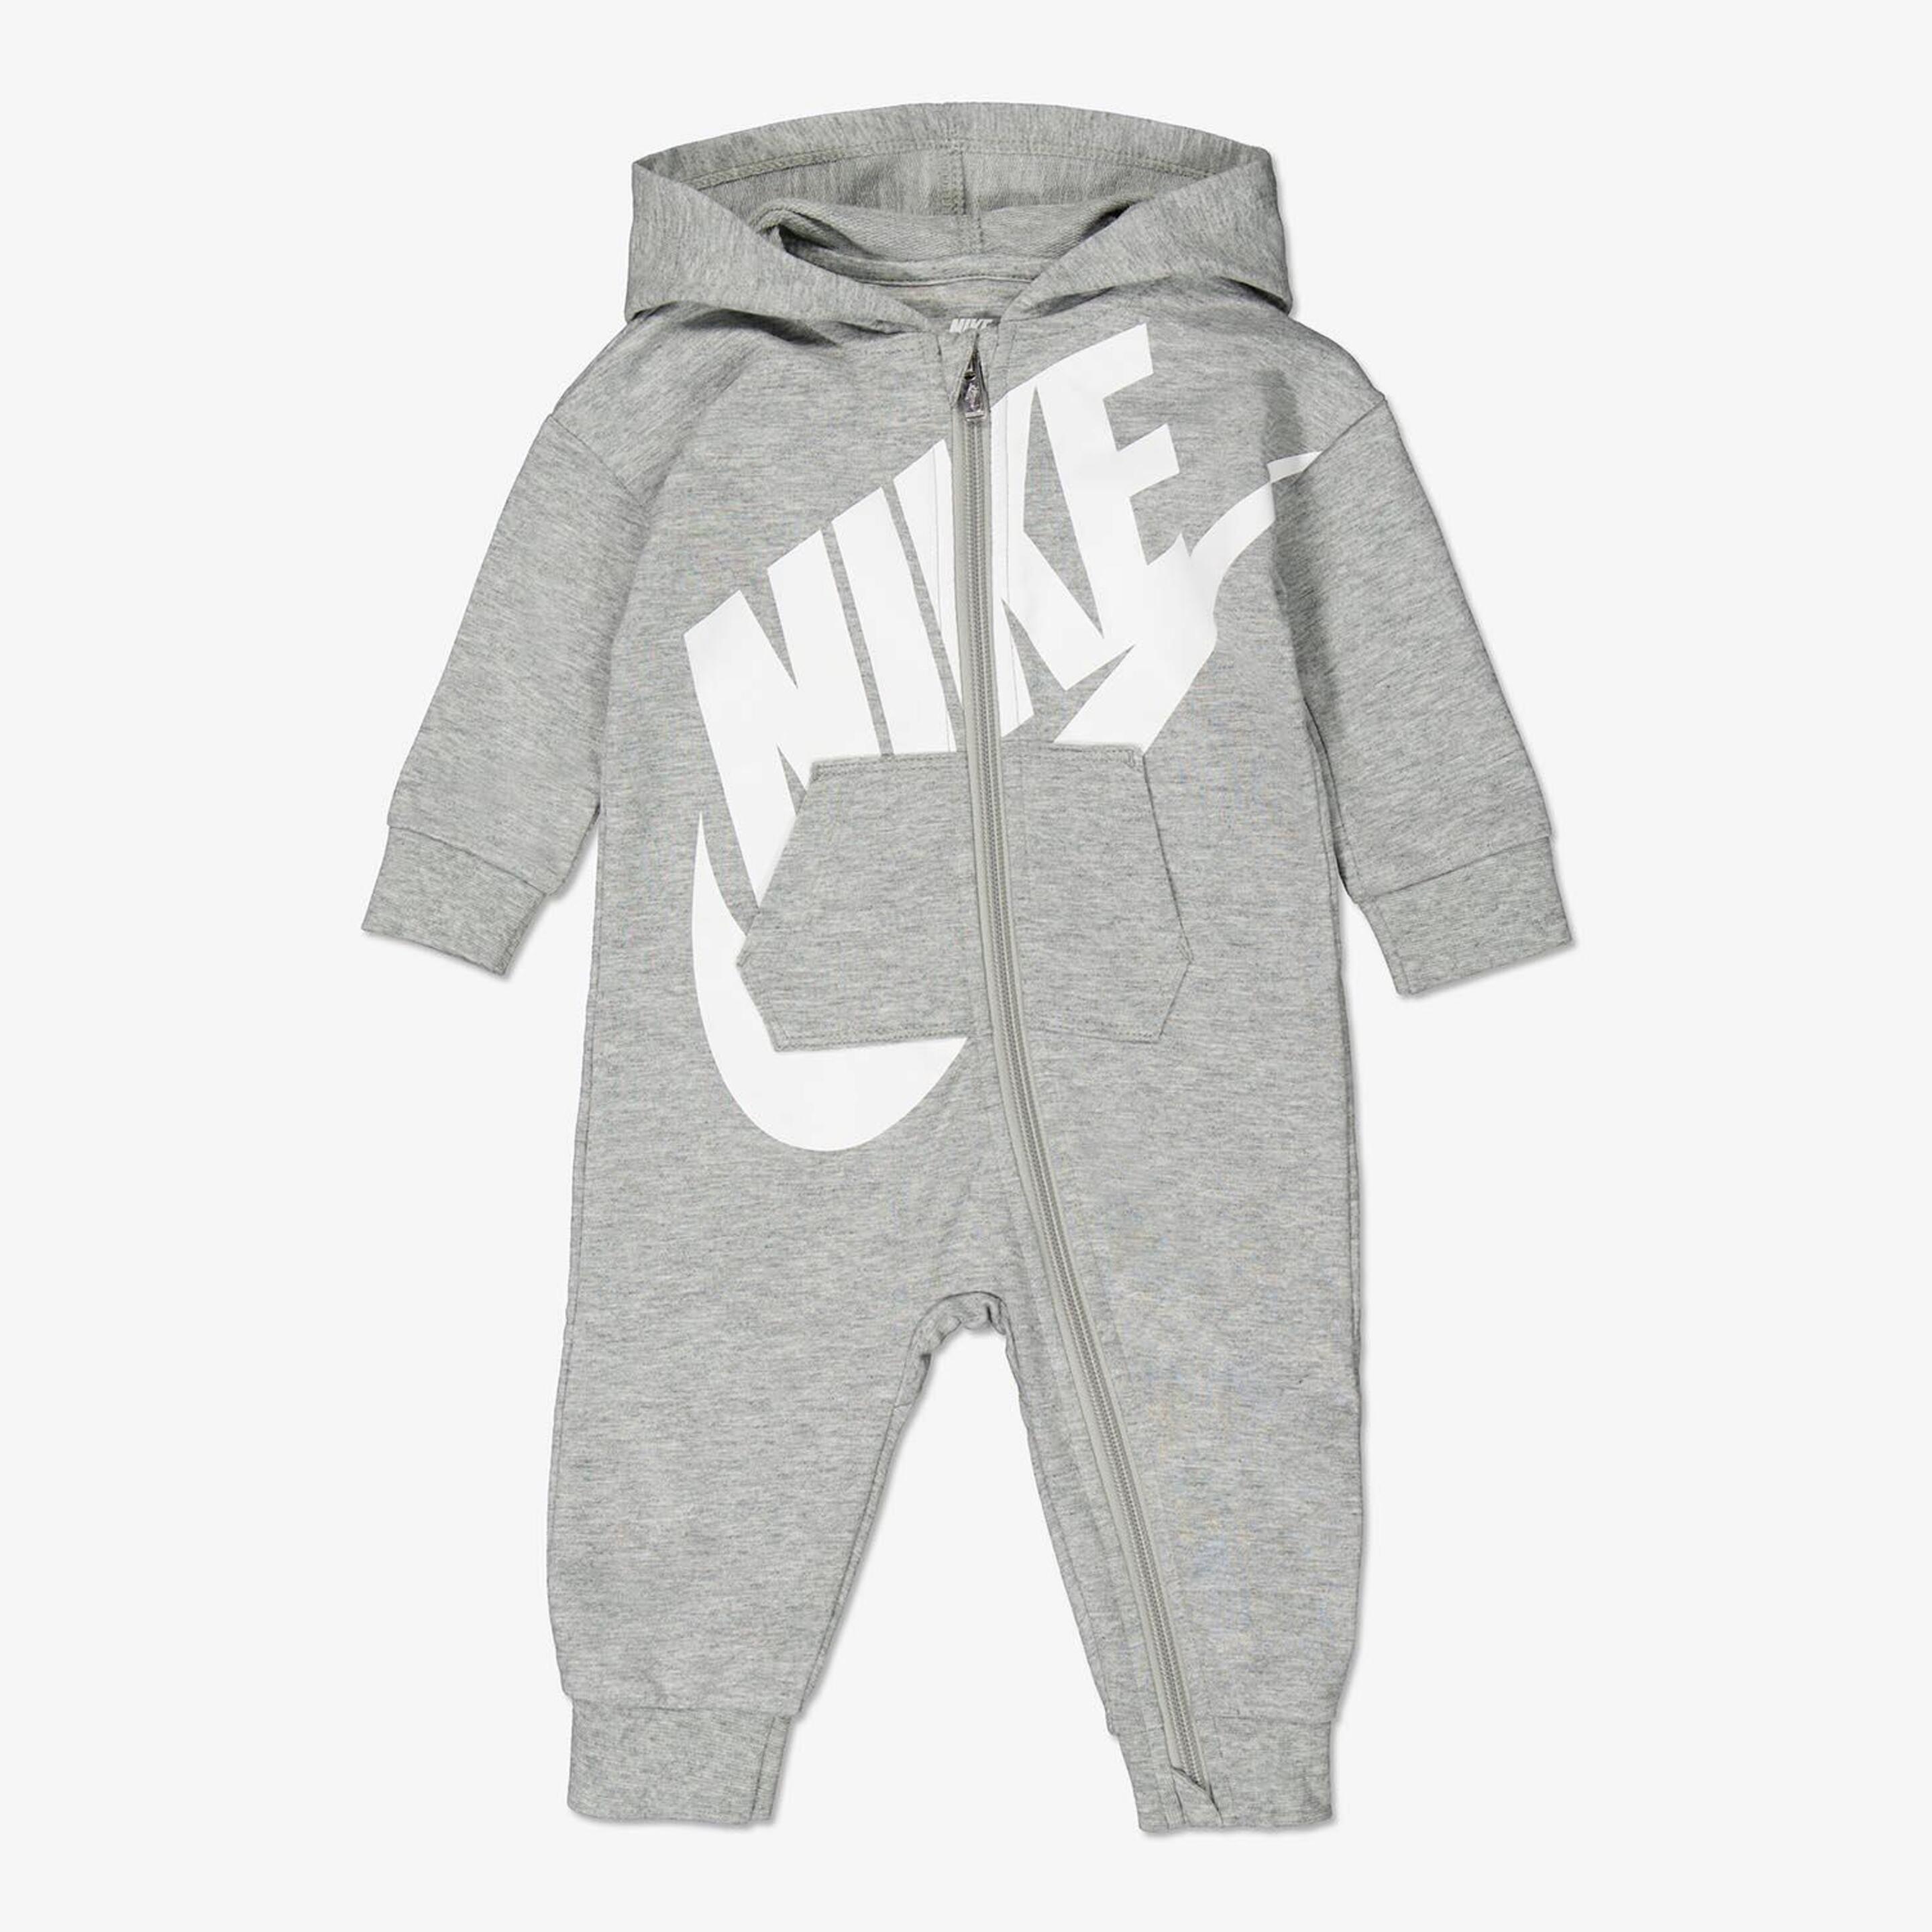 Chándal Nike - gris - Chándal Bebé